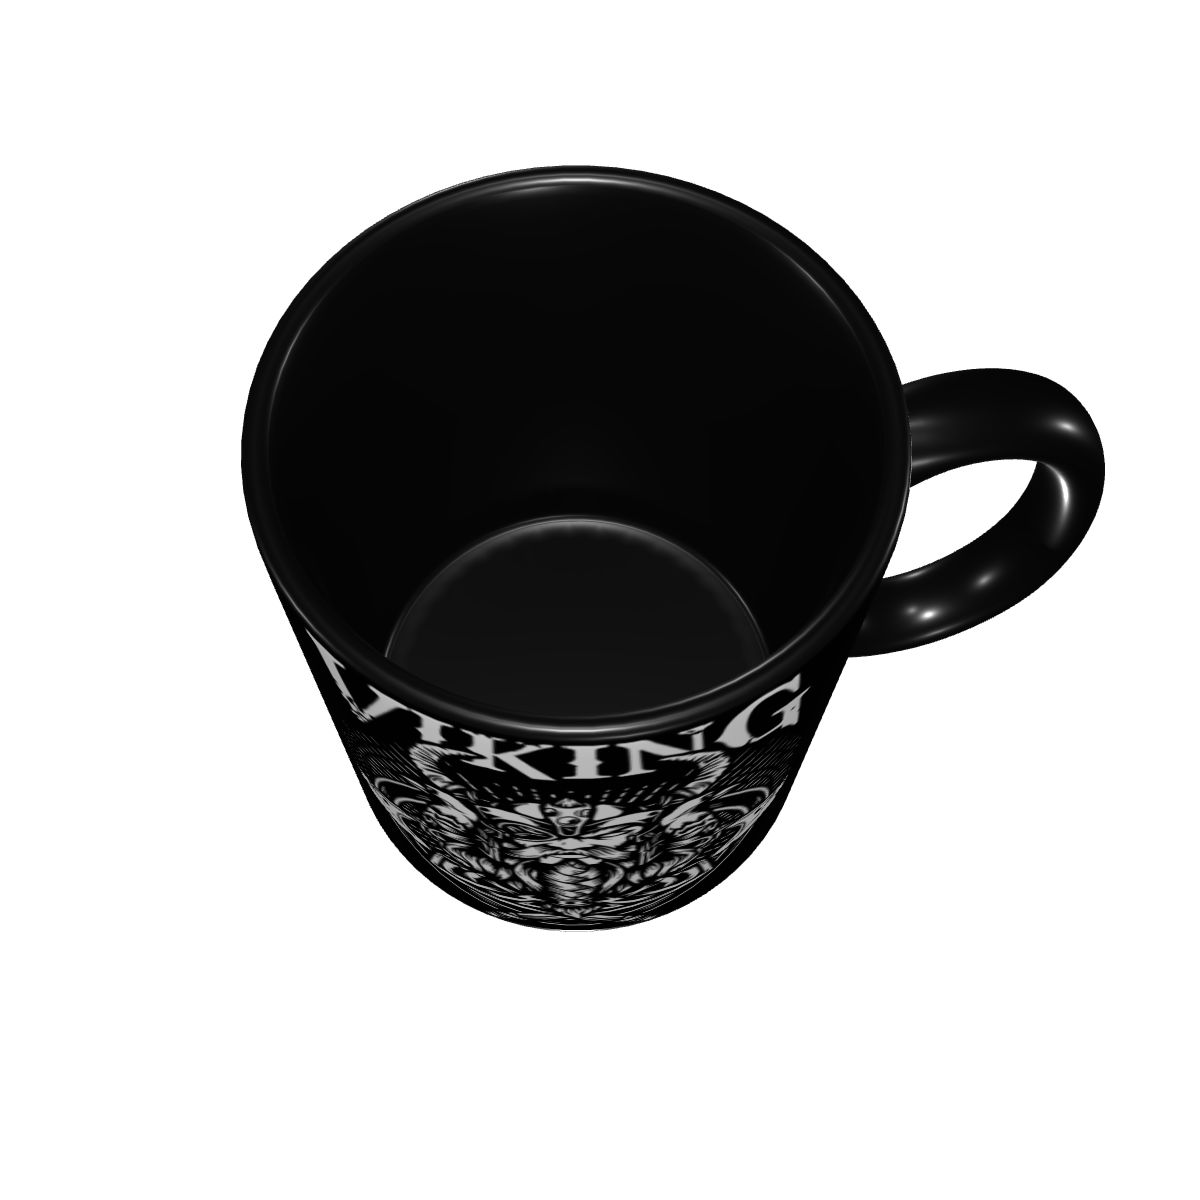 Norse God Odin Two -Tone Coffee Mug